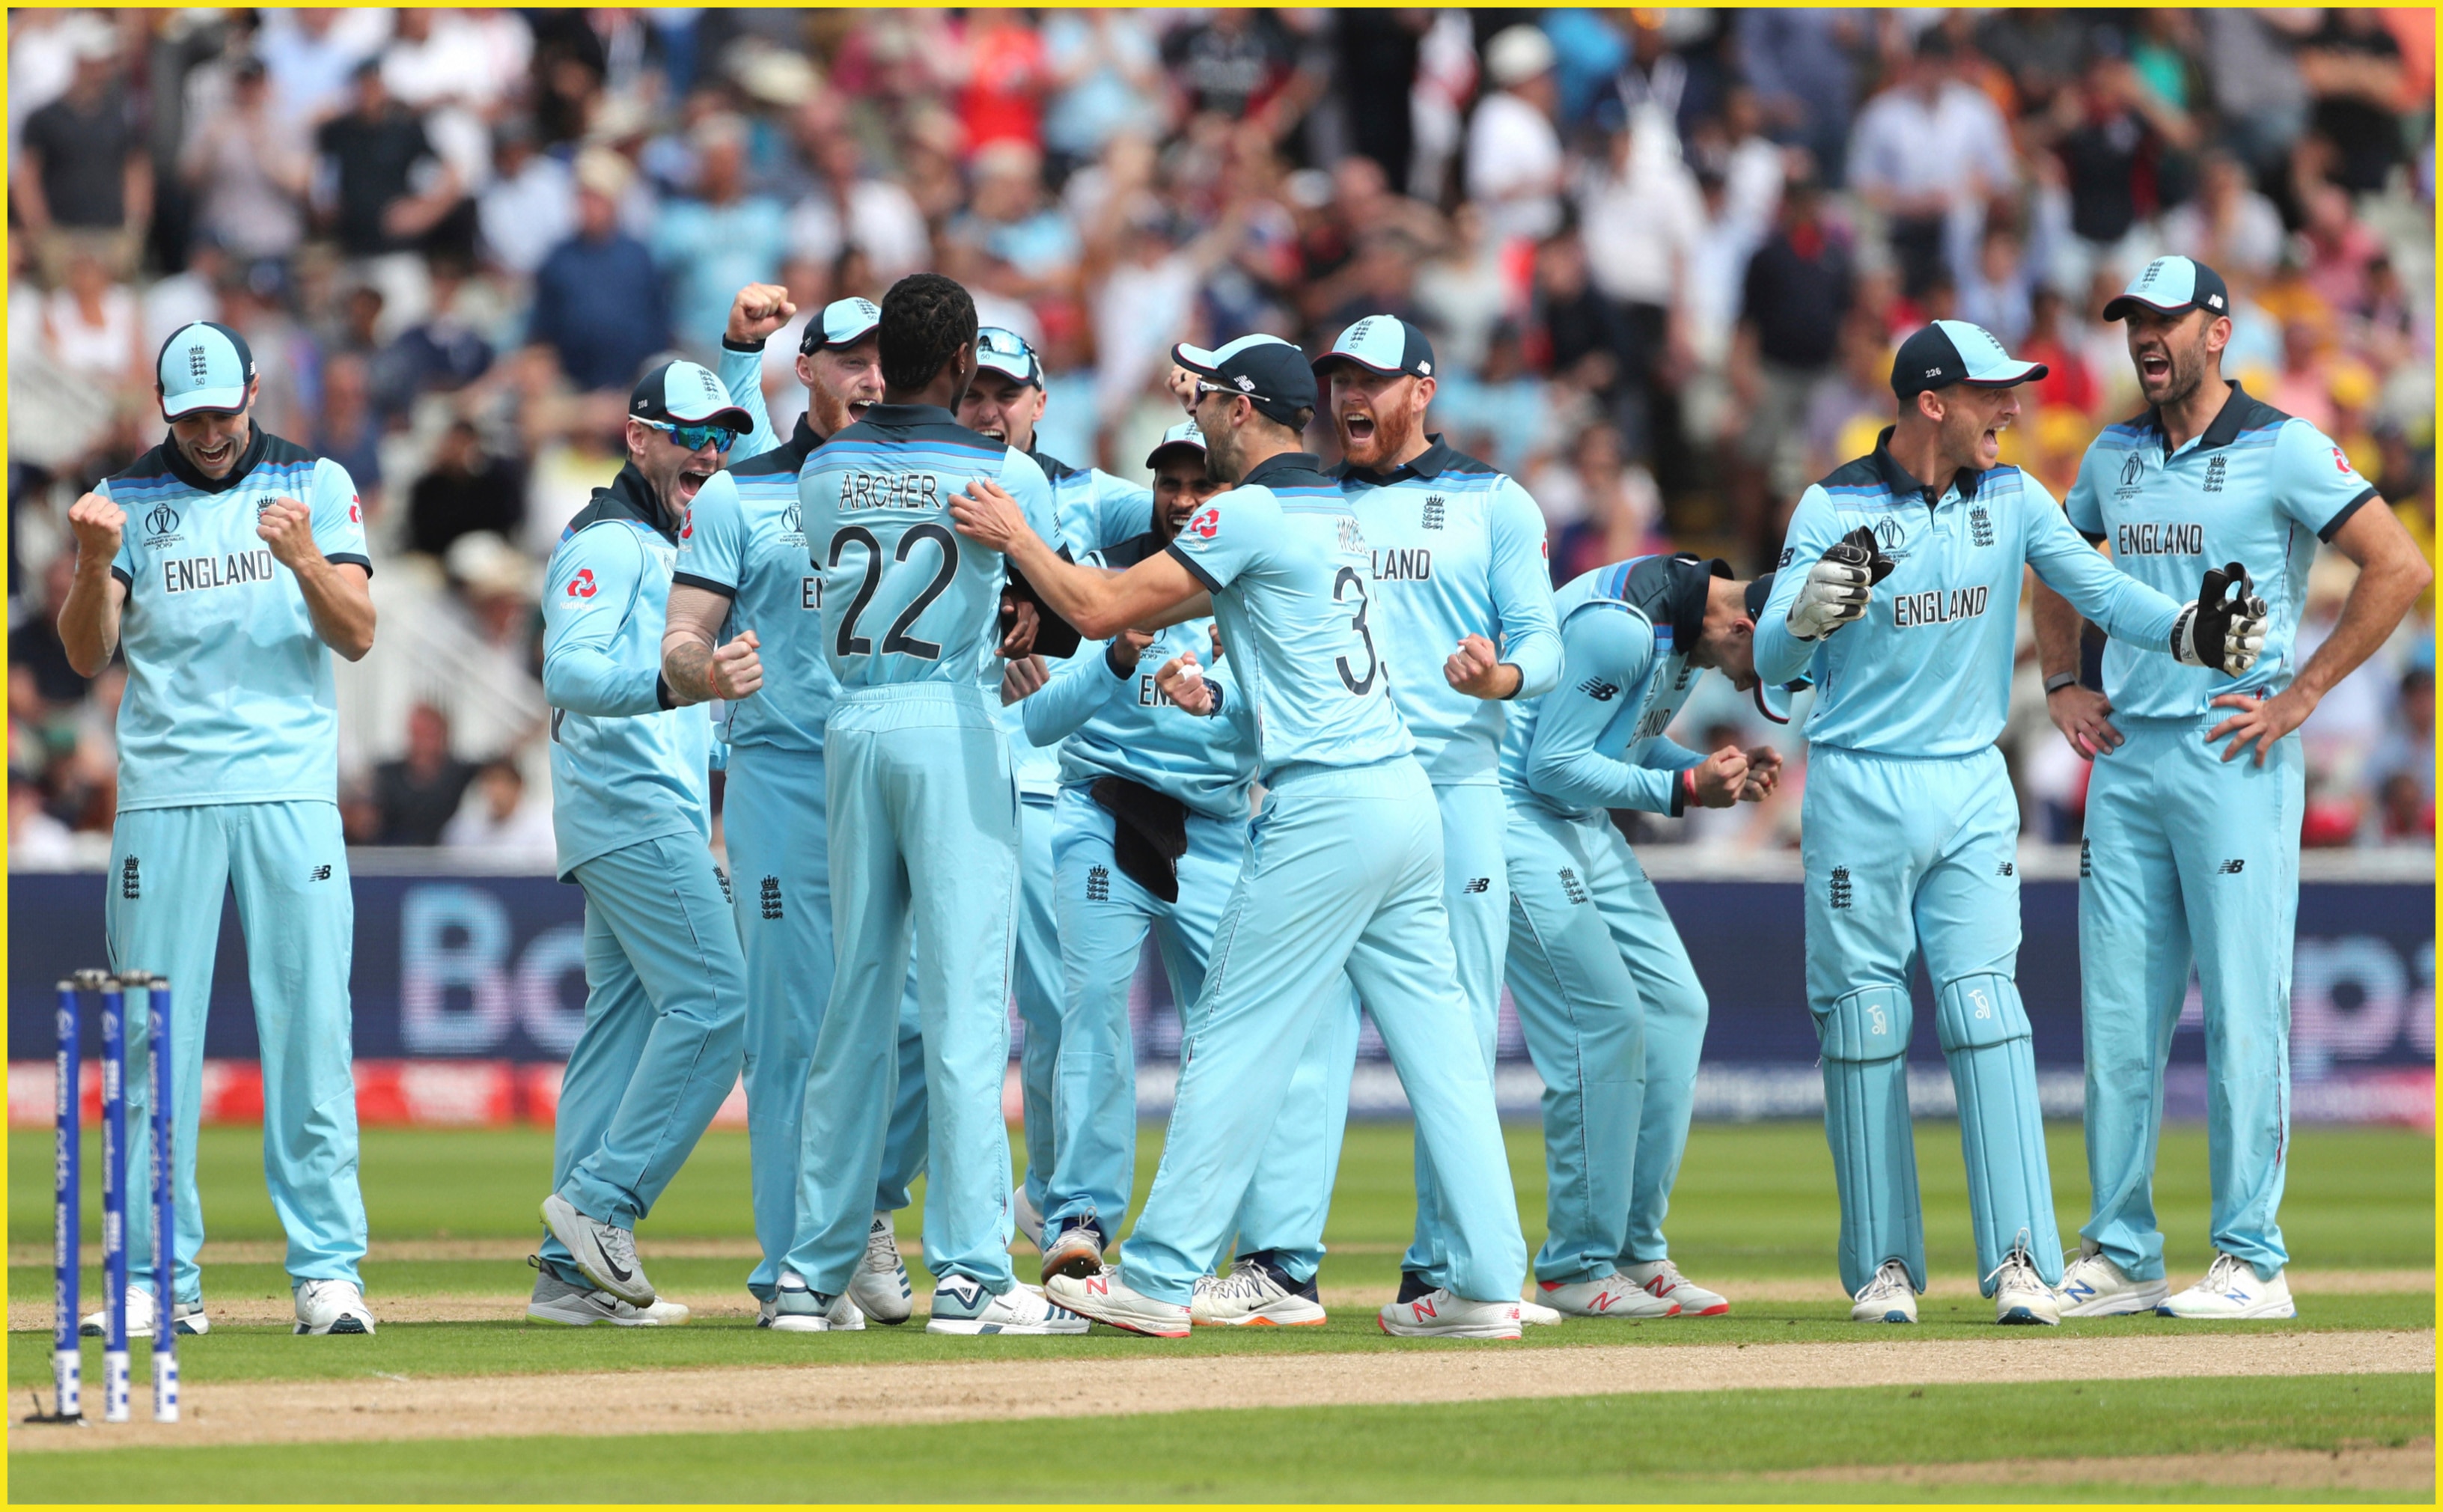 England vs Australia Live Cricket Score, World Cup 2019 In Pictures - ENG vs AUS Live ...3264 x 2020